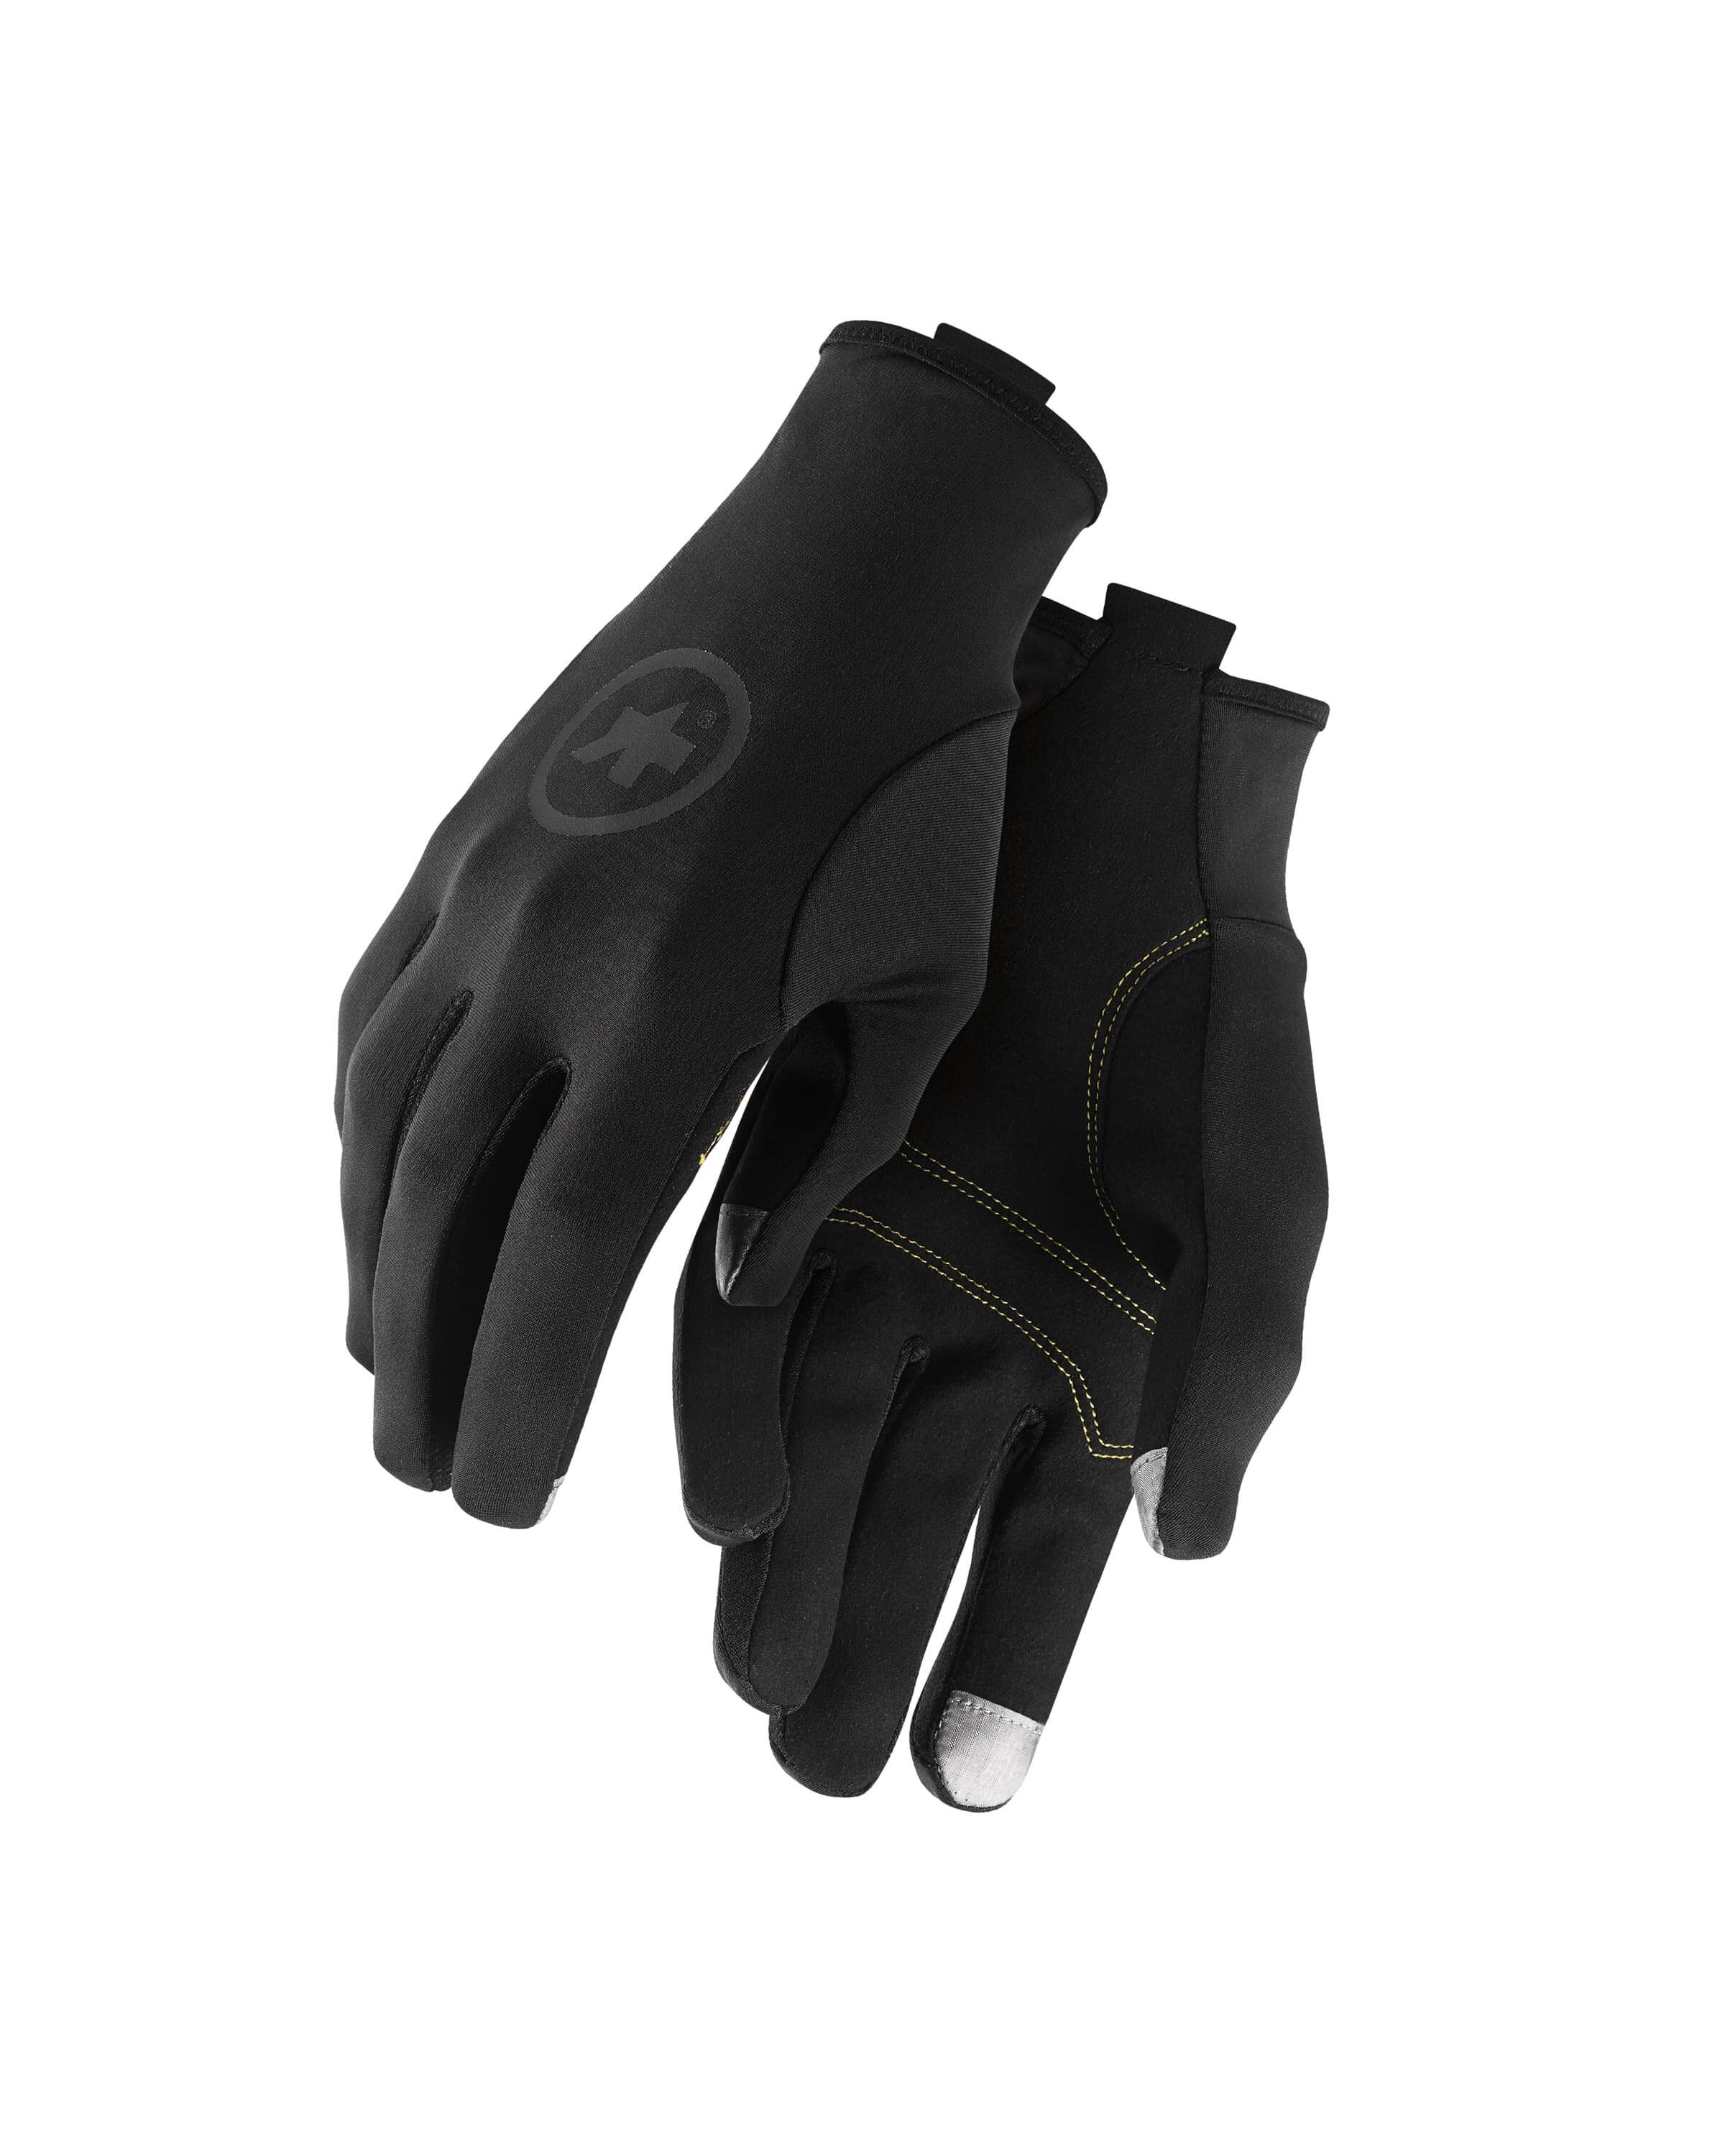 Assos Spring Fall Gloves - Cycling gloves